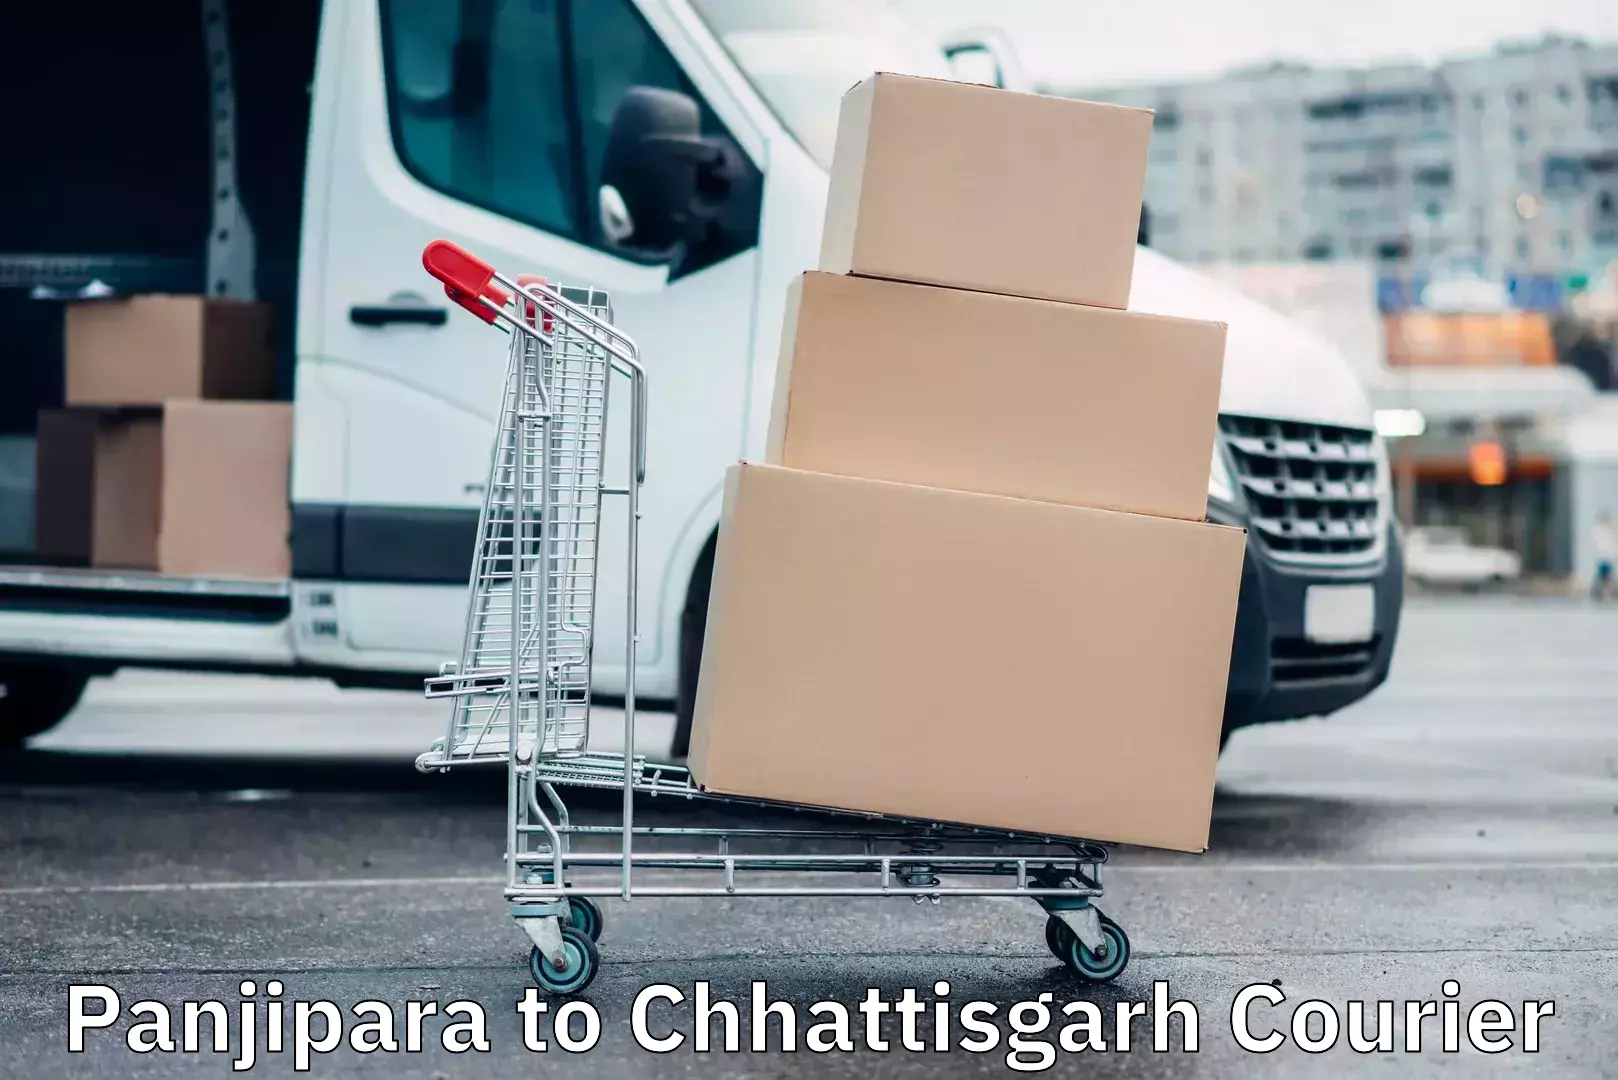 International parcel service Panjipara to Chhattisgarh